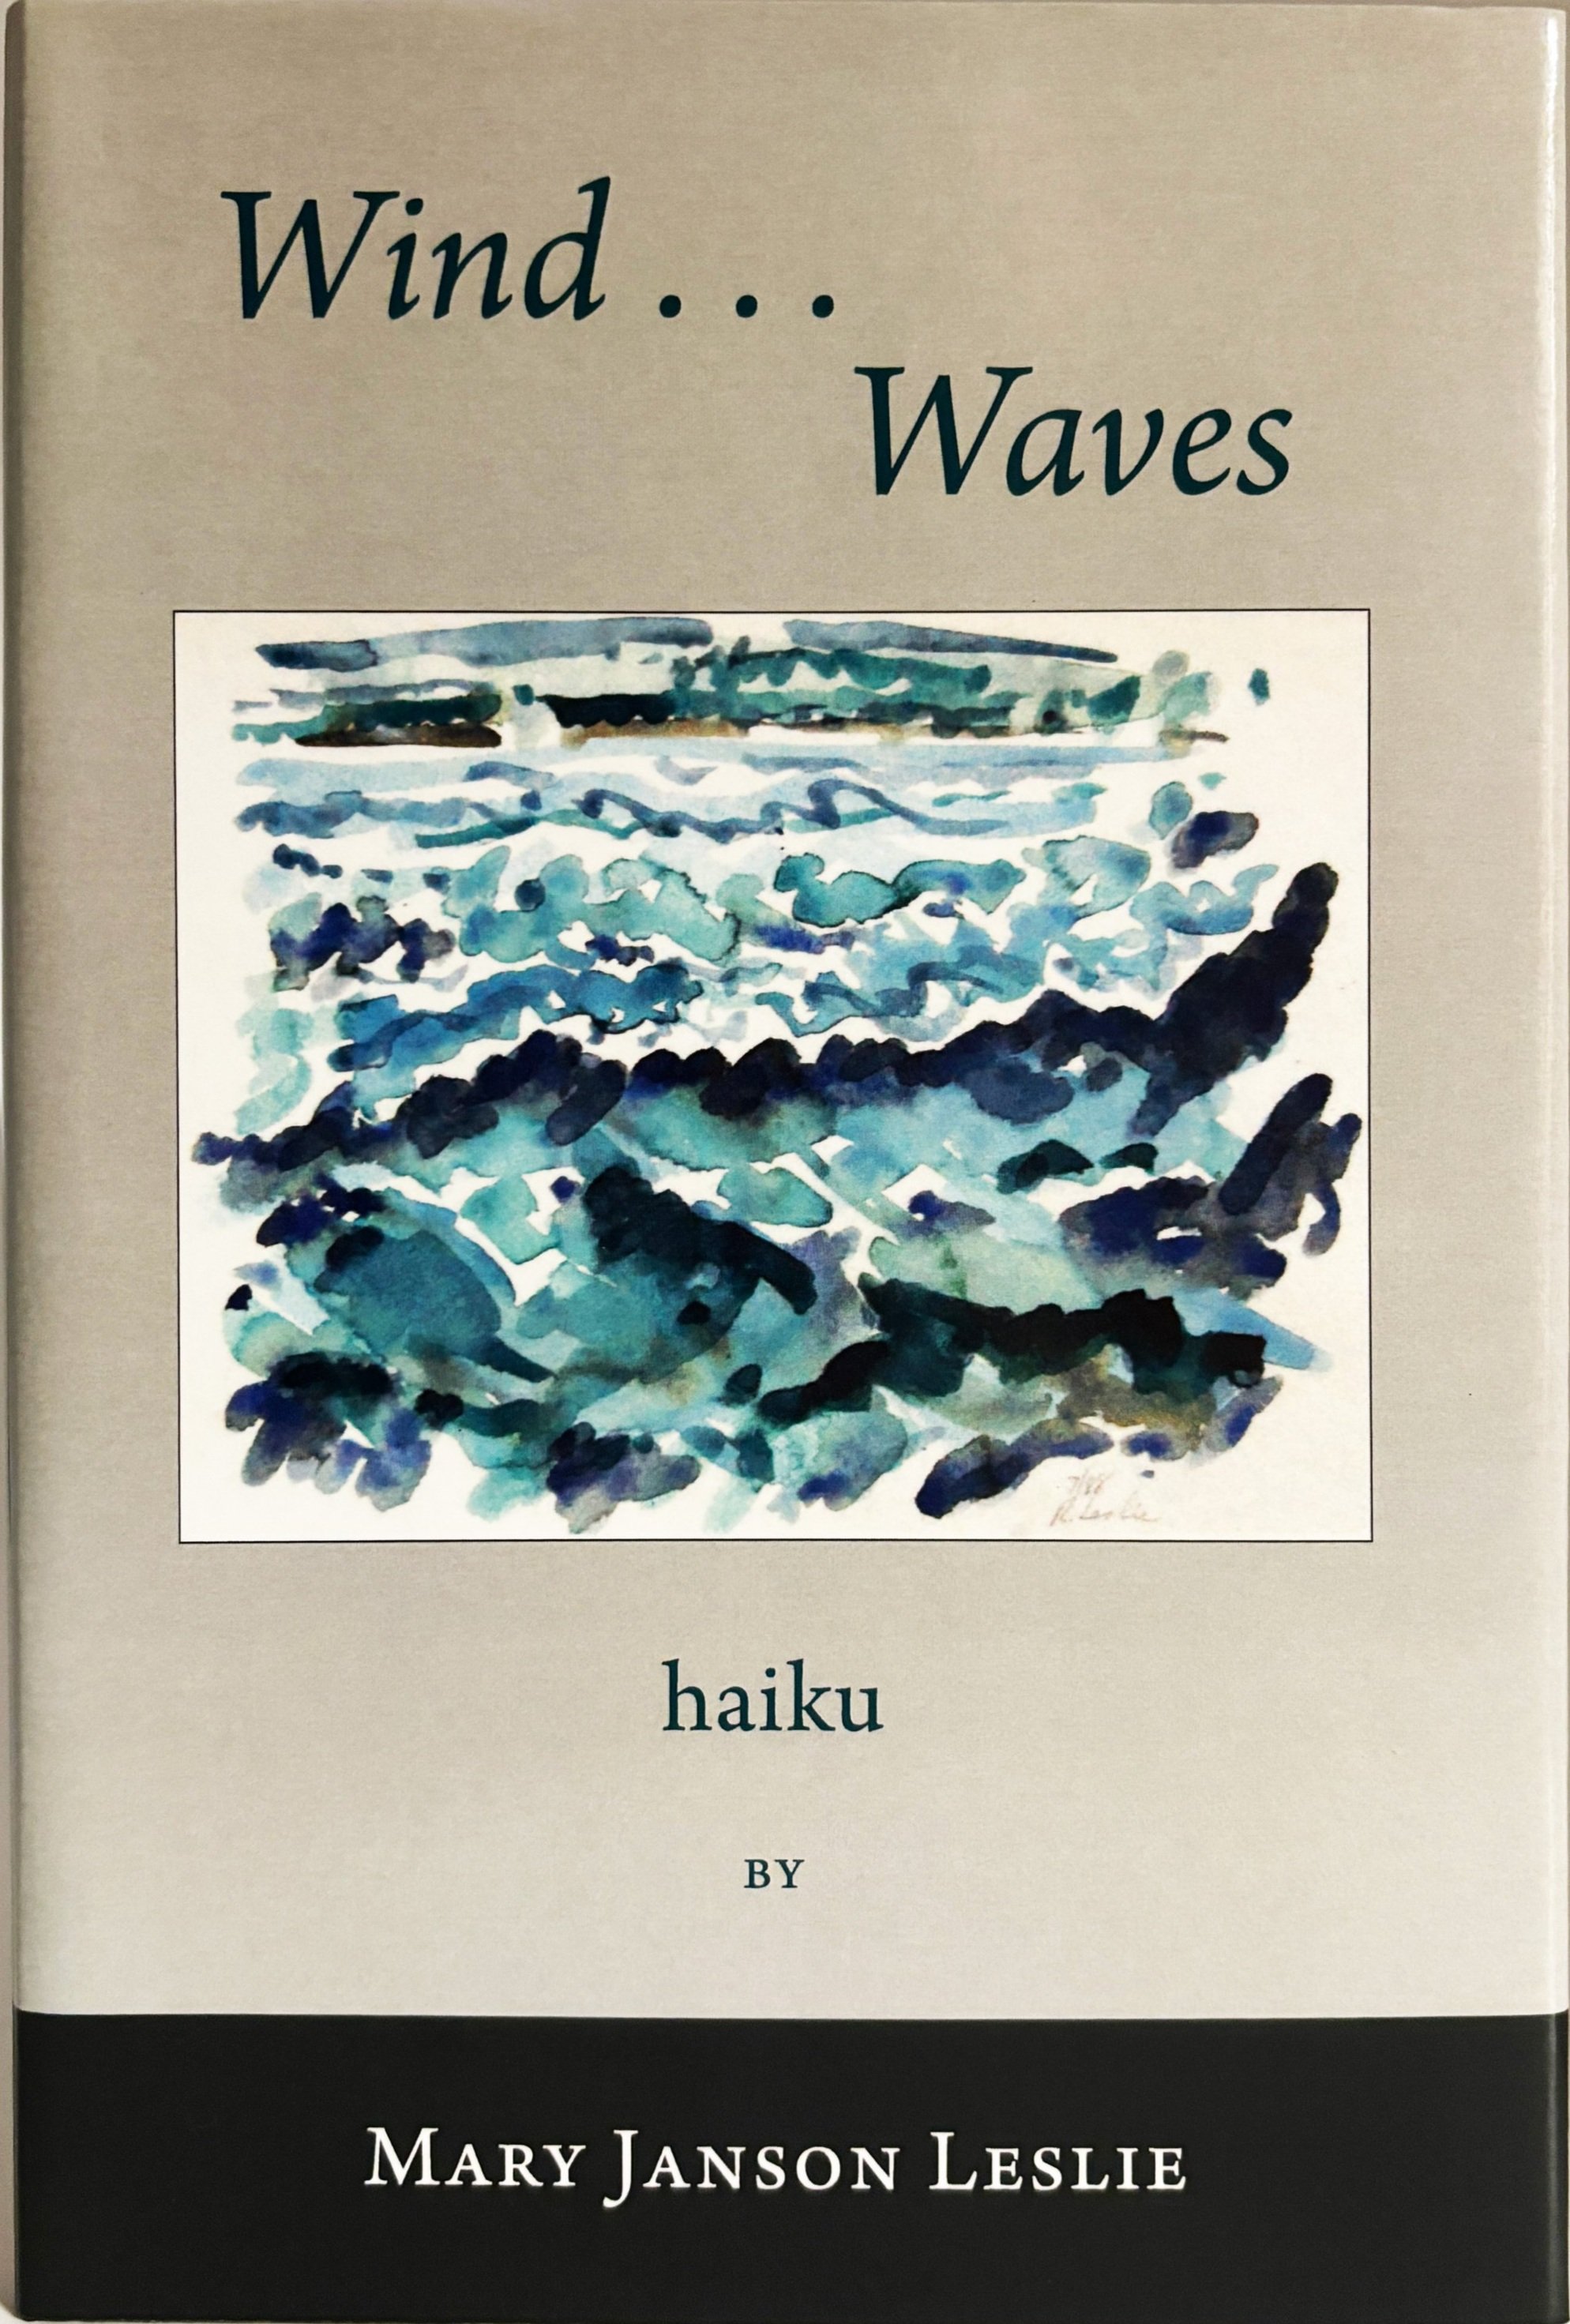 Wind. . .Waves, haiku (2011)